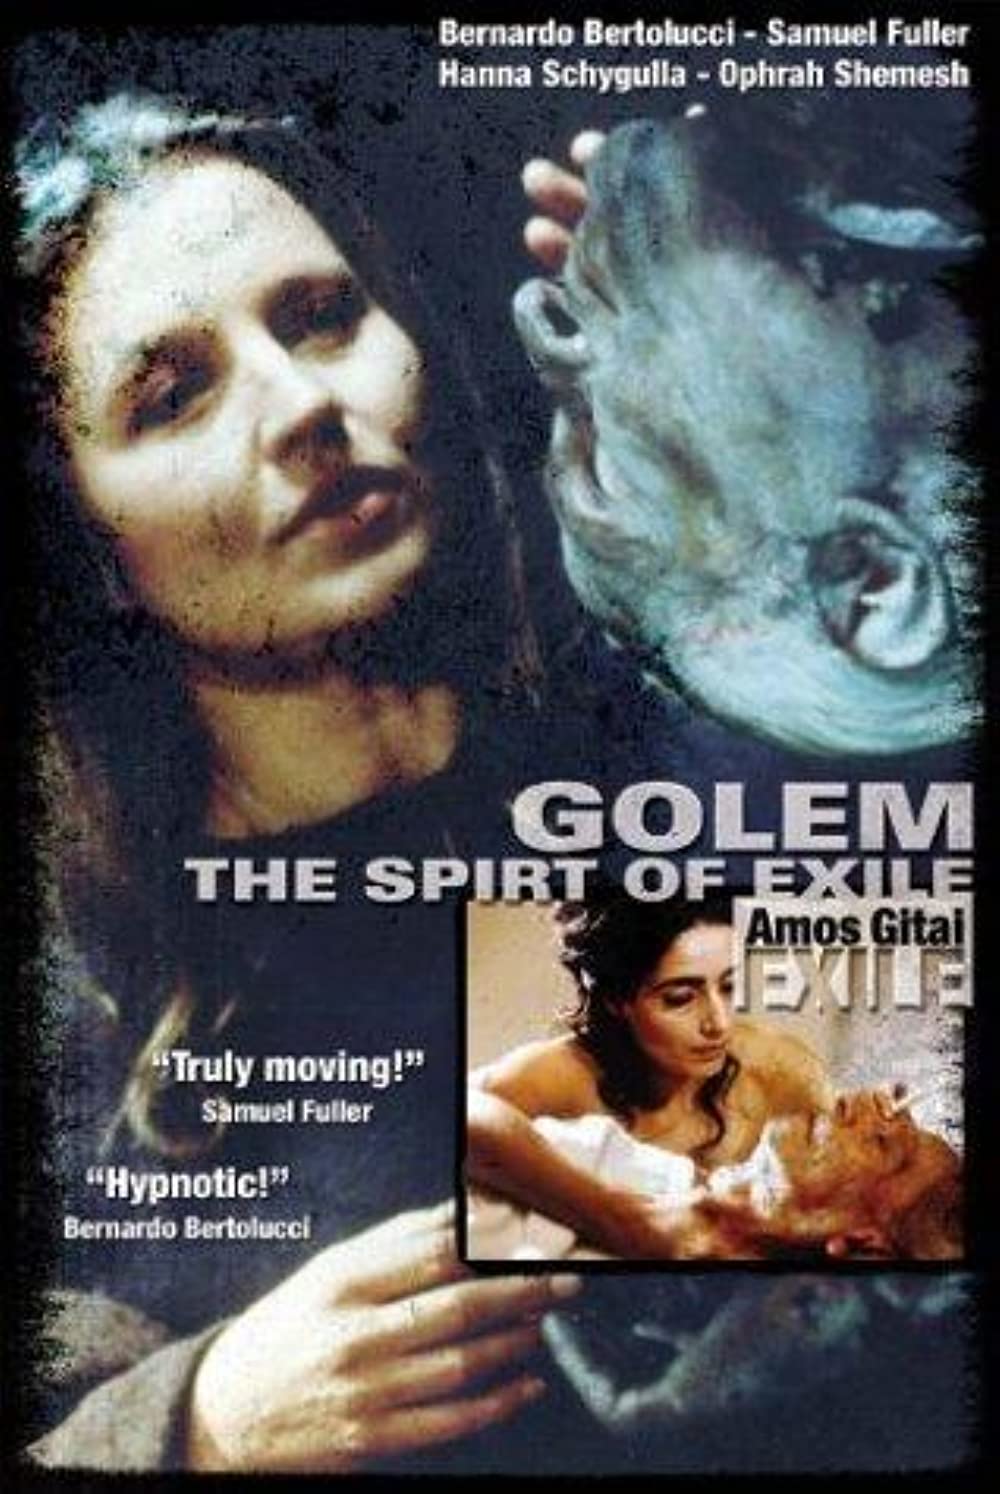 Filmbeschreibung zu Golem, l'esprit de l'exil